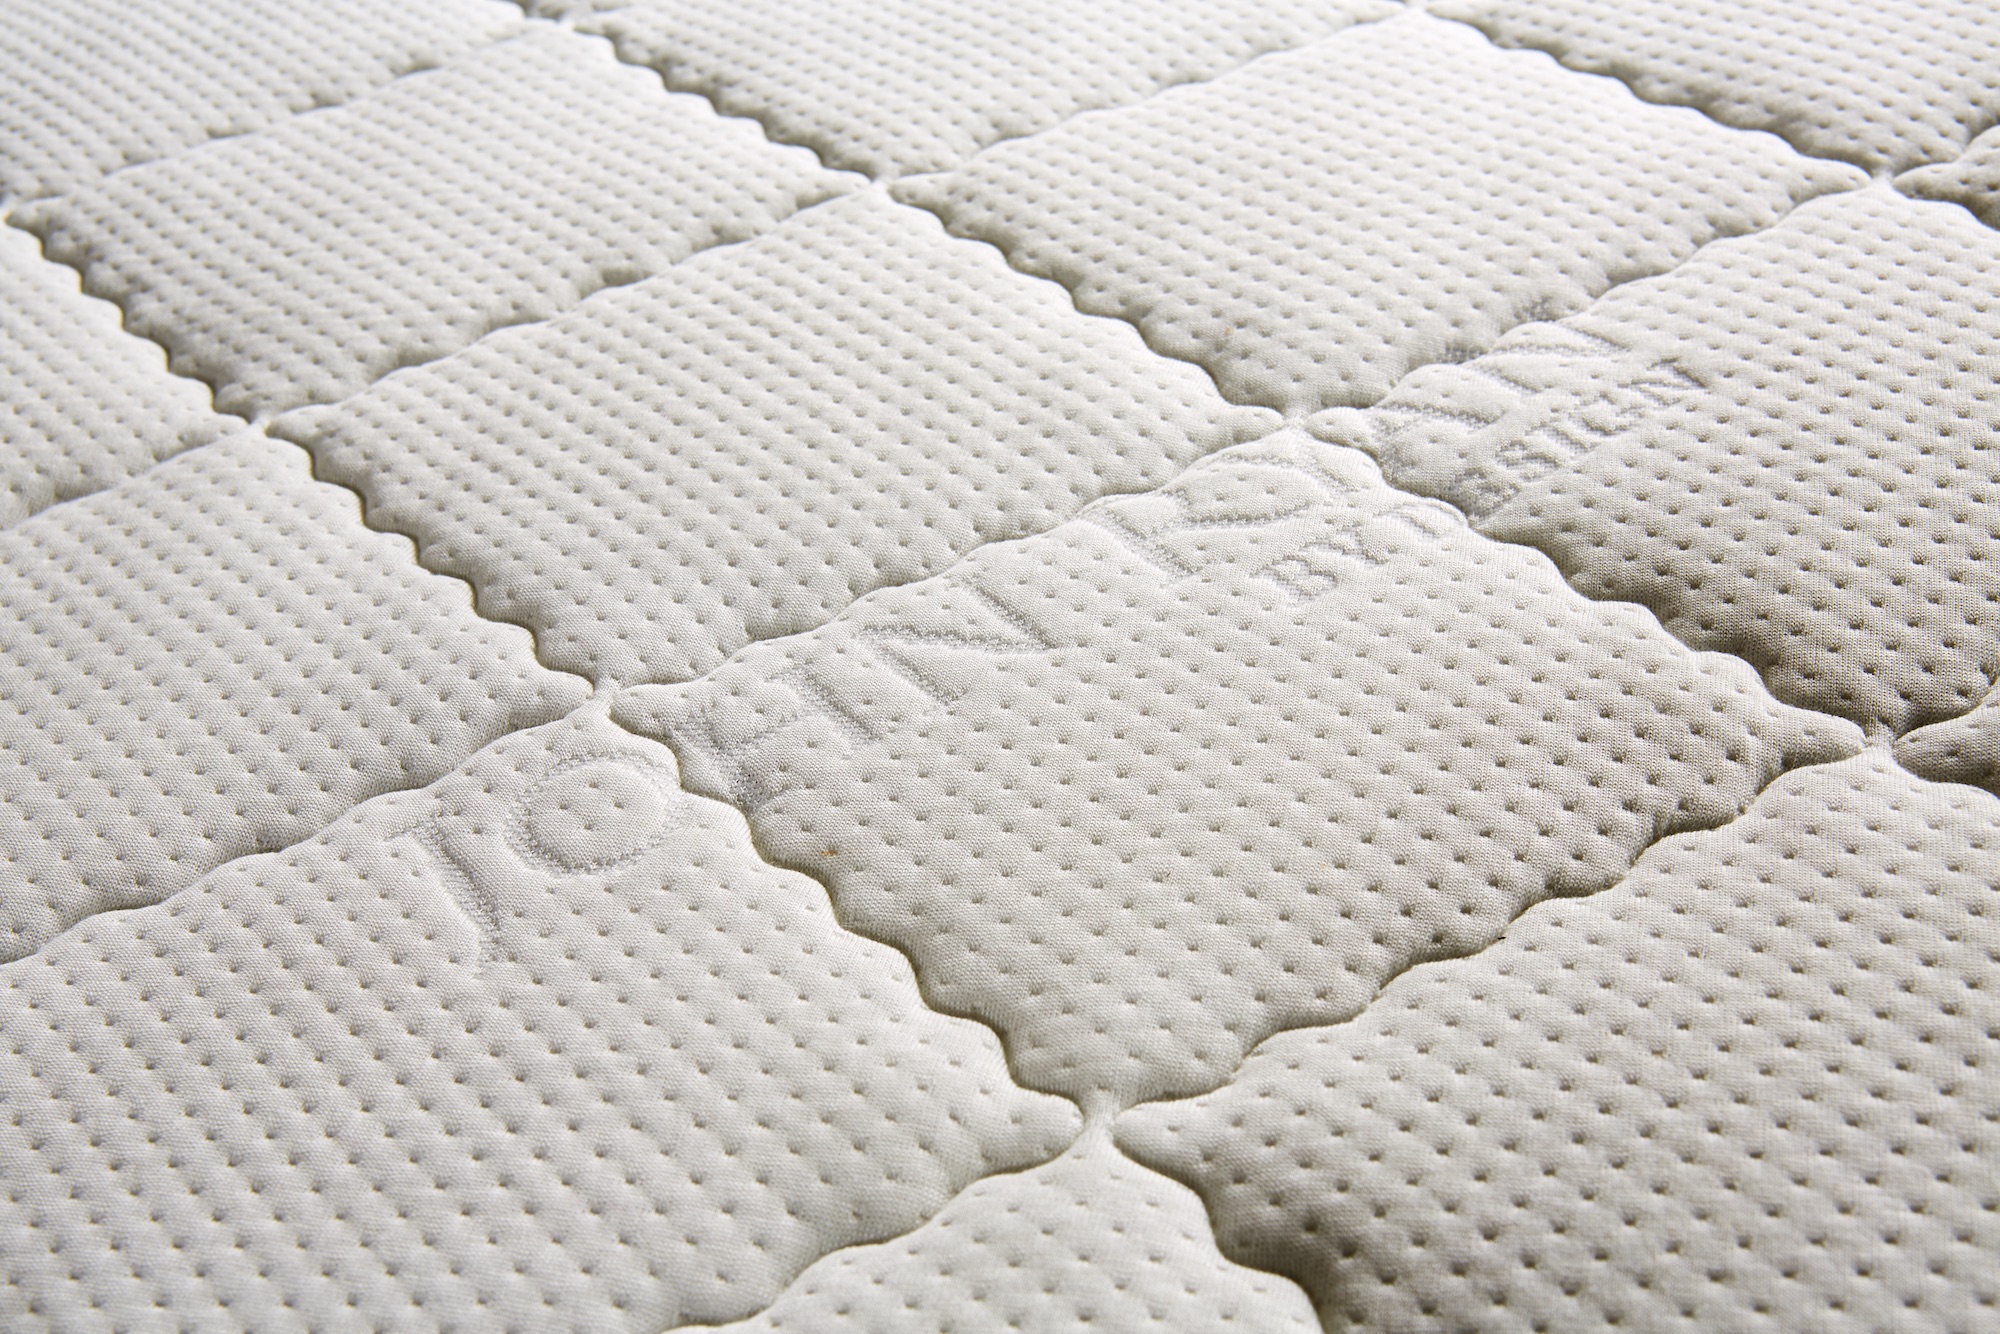 Fusion 3 mattress fabric ticking close up